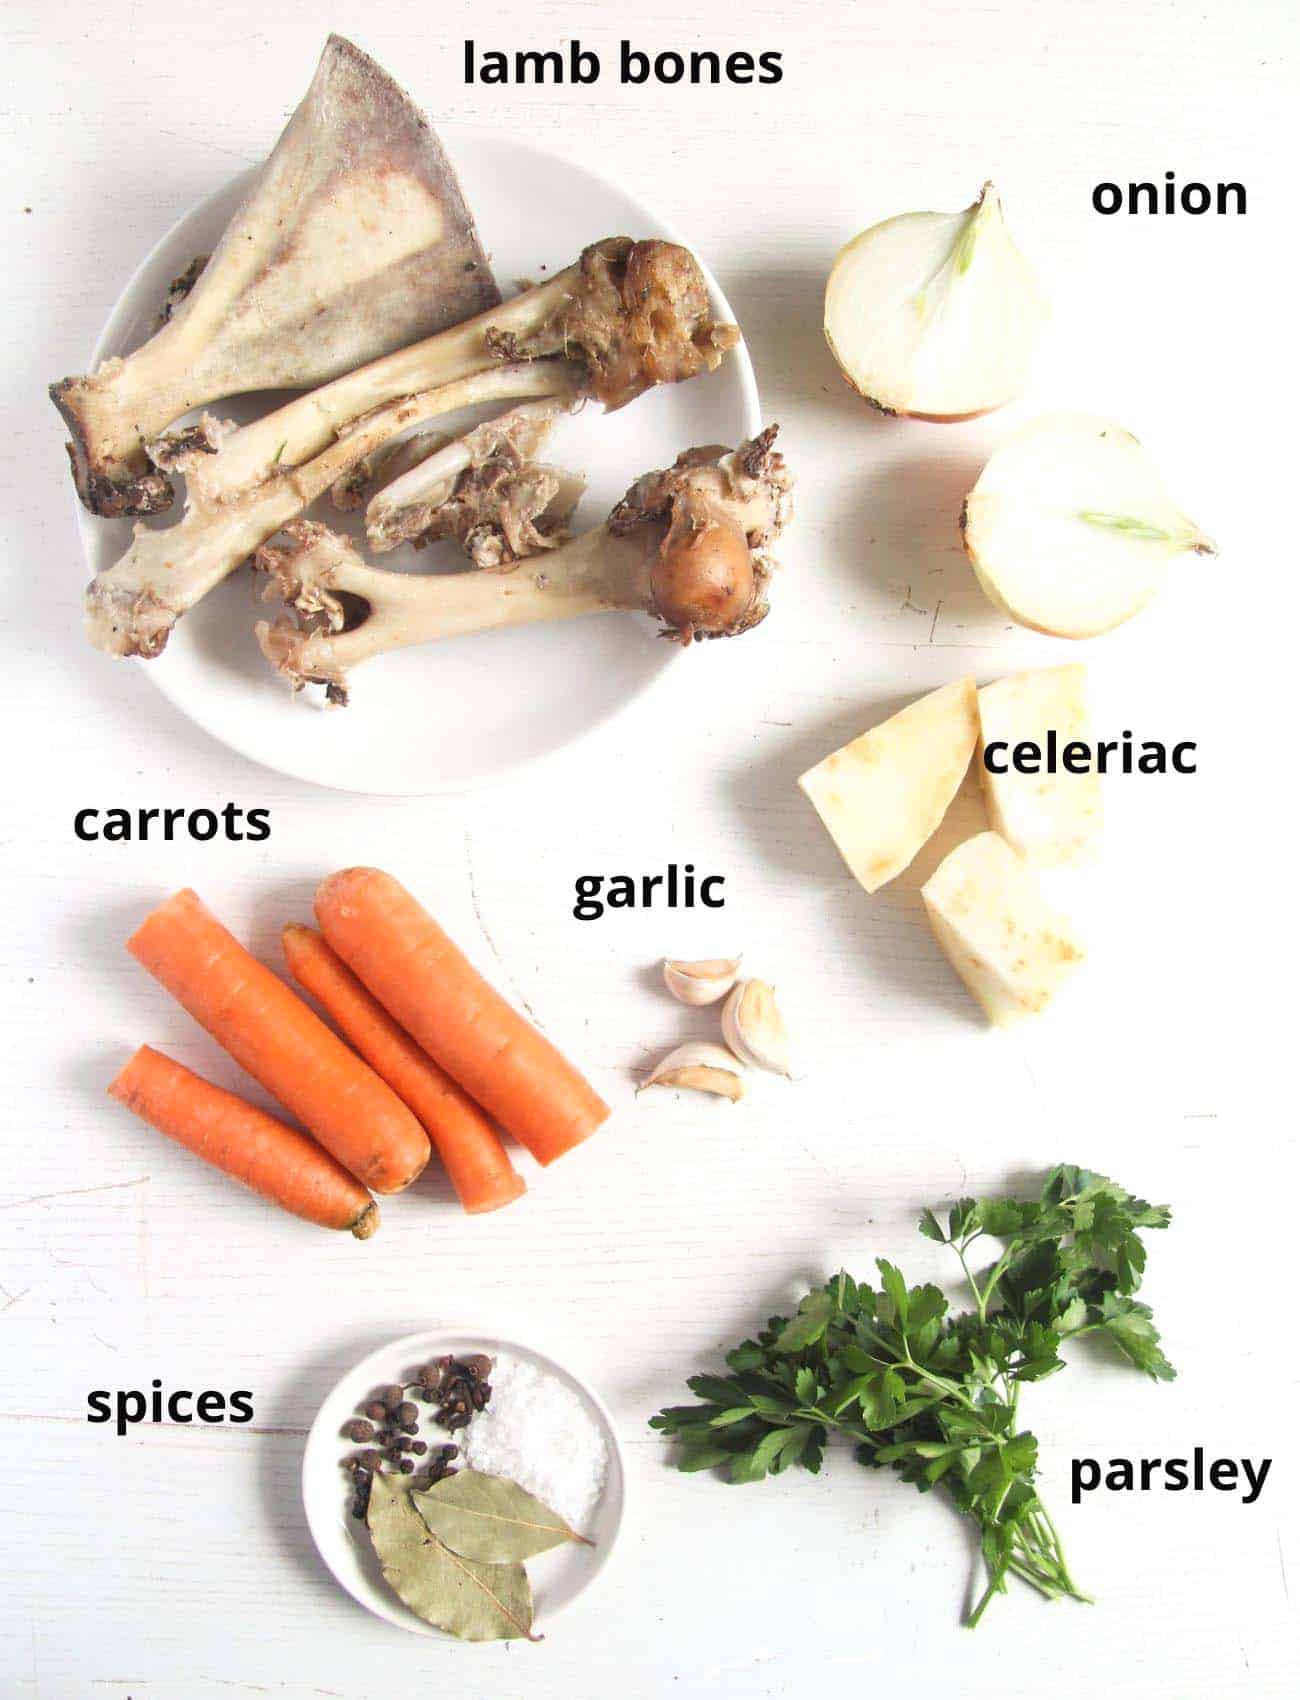 bones, carrots, celeriac, onions, garlic, parsley, spices for making stock.